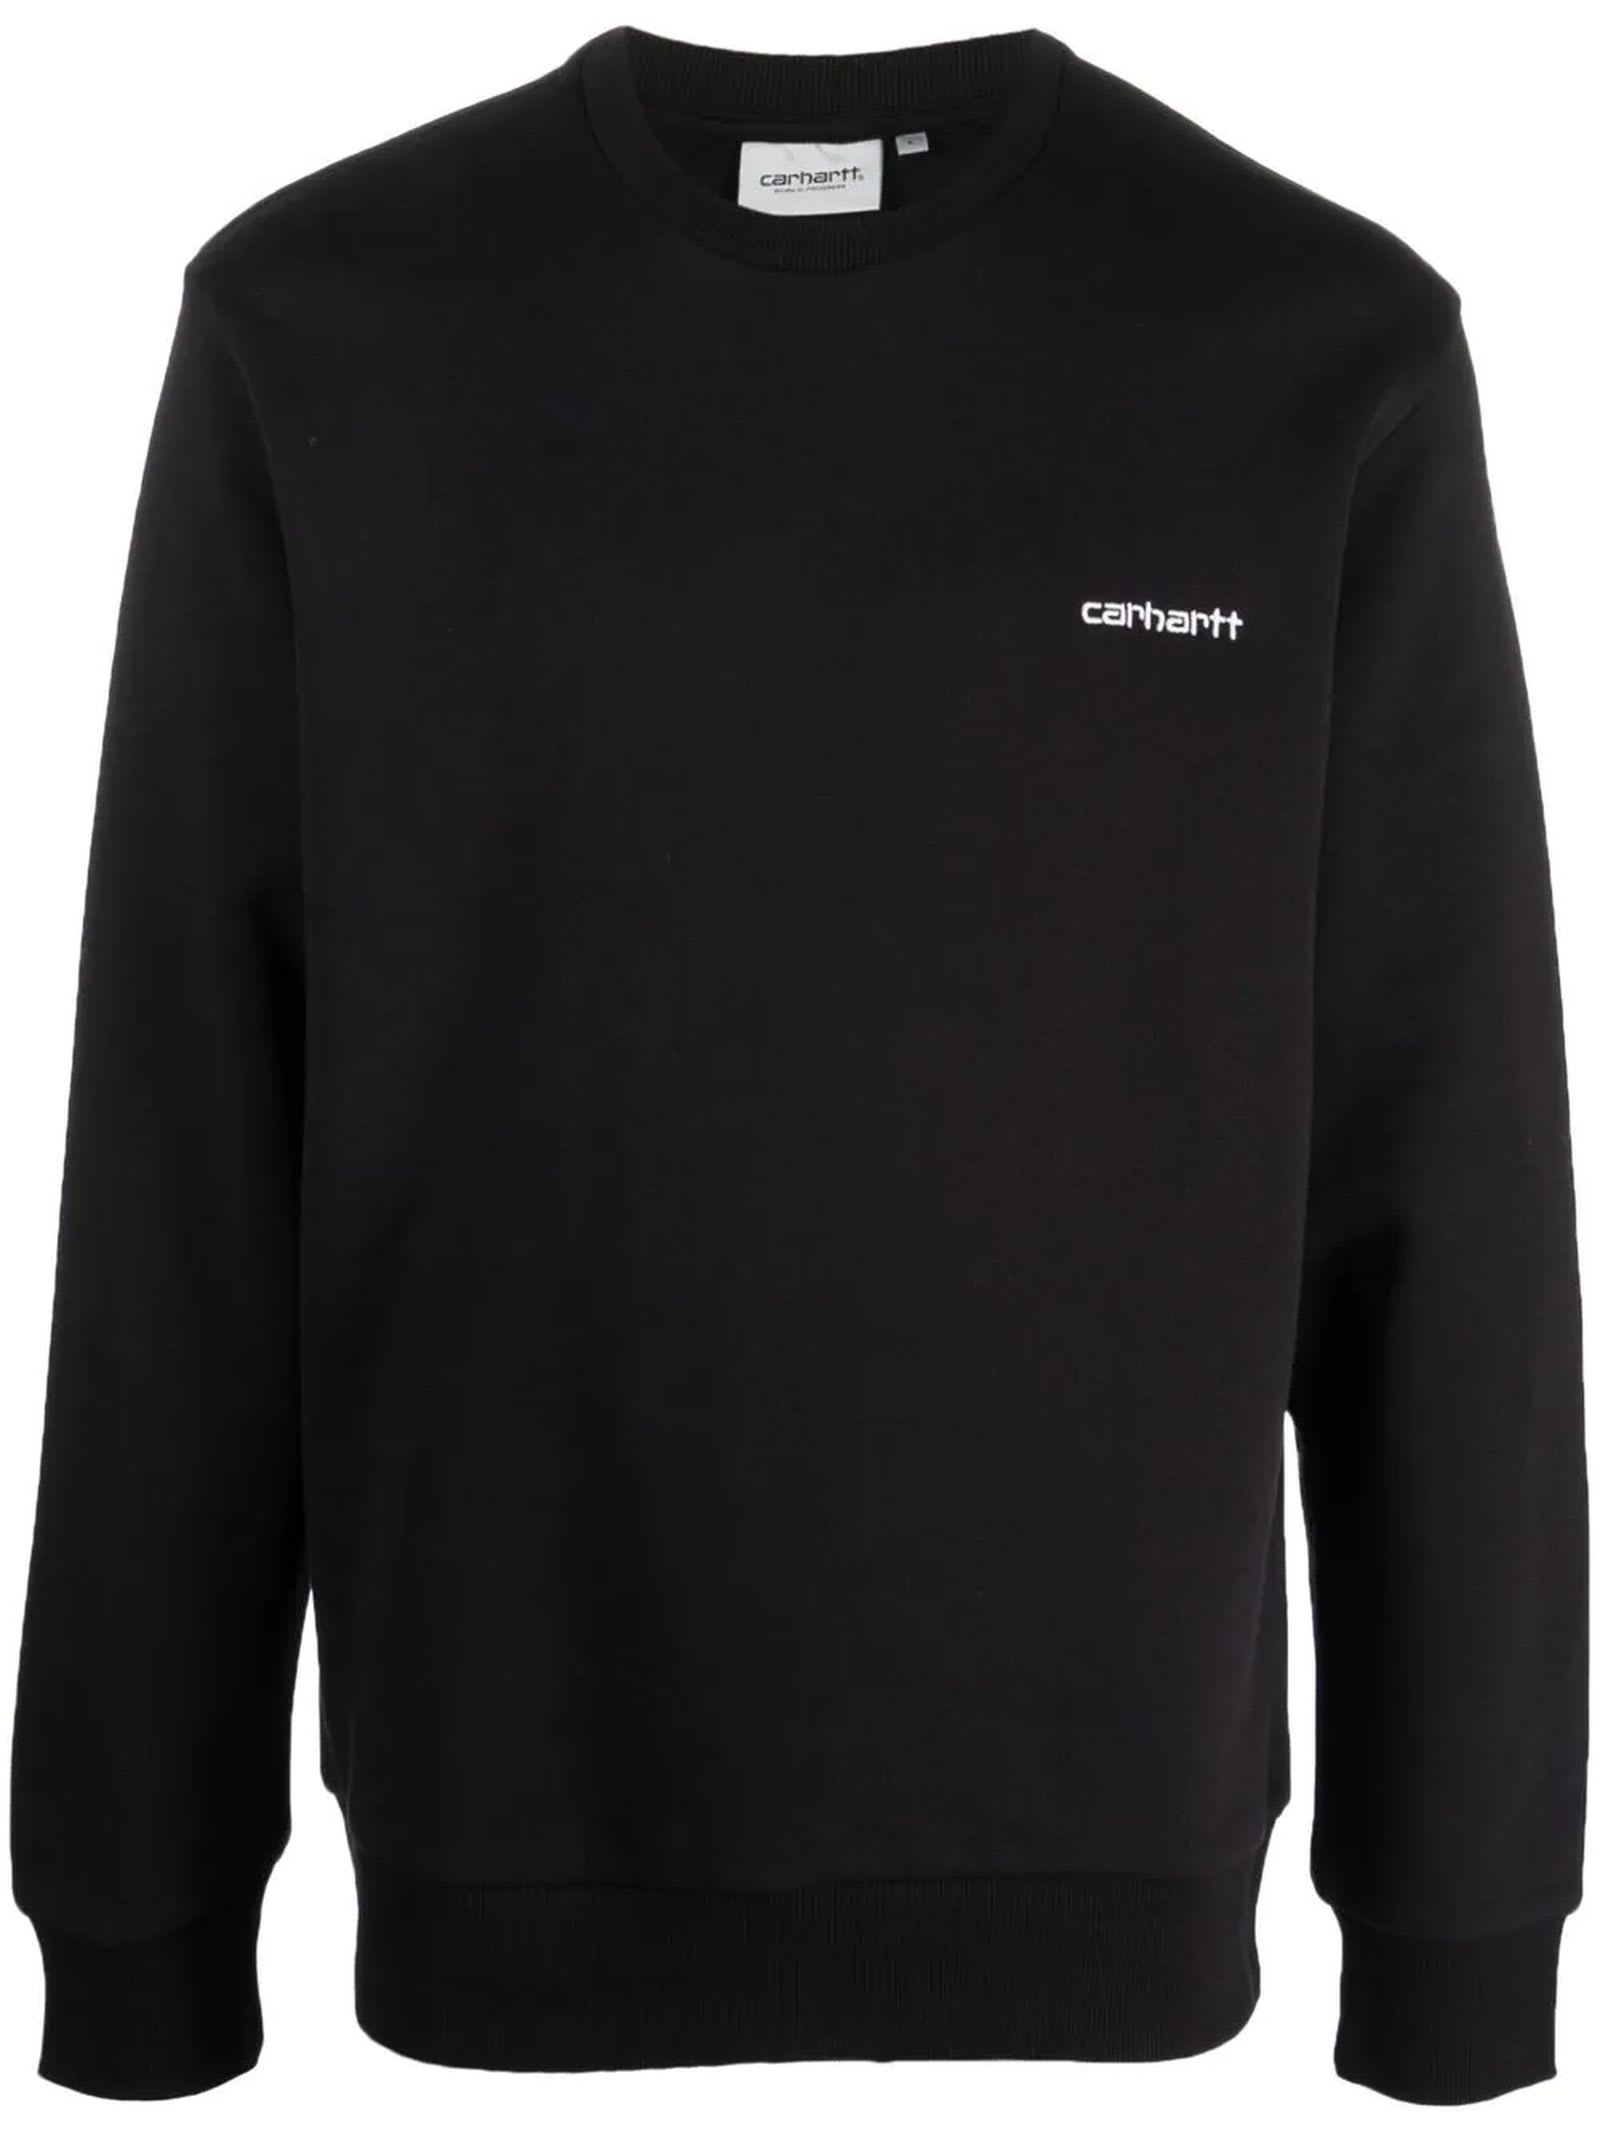 Carhartt Black Cotton Blend Sweatshirt